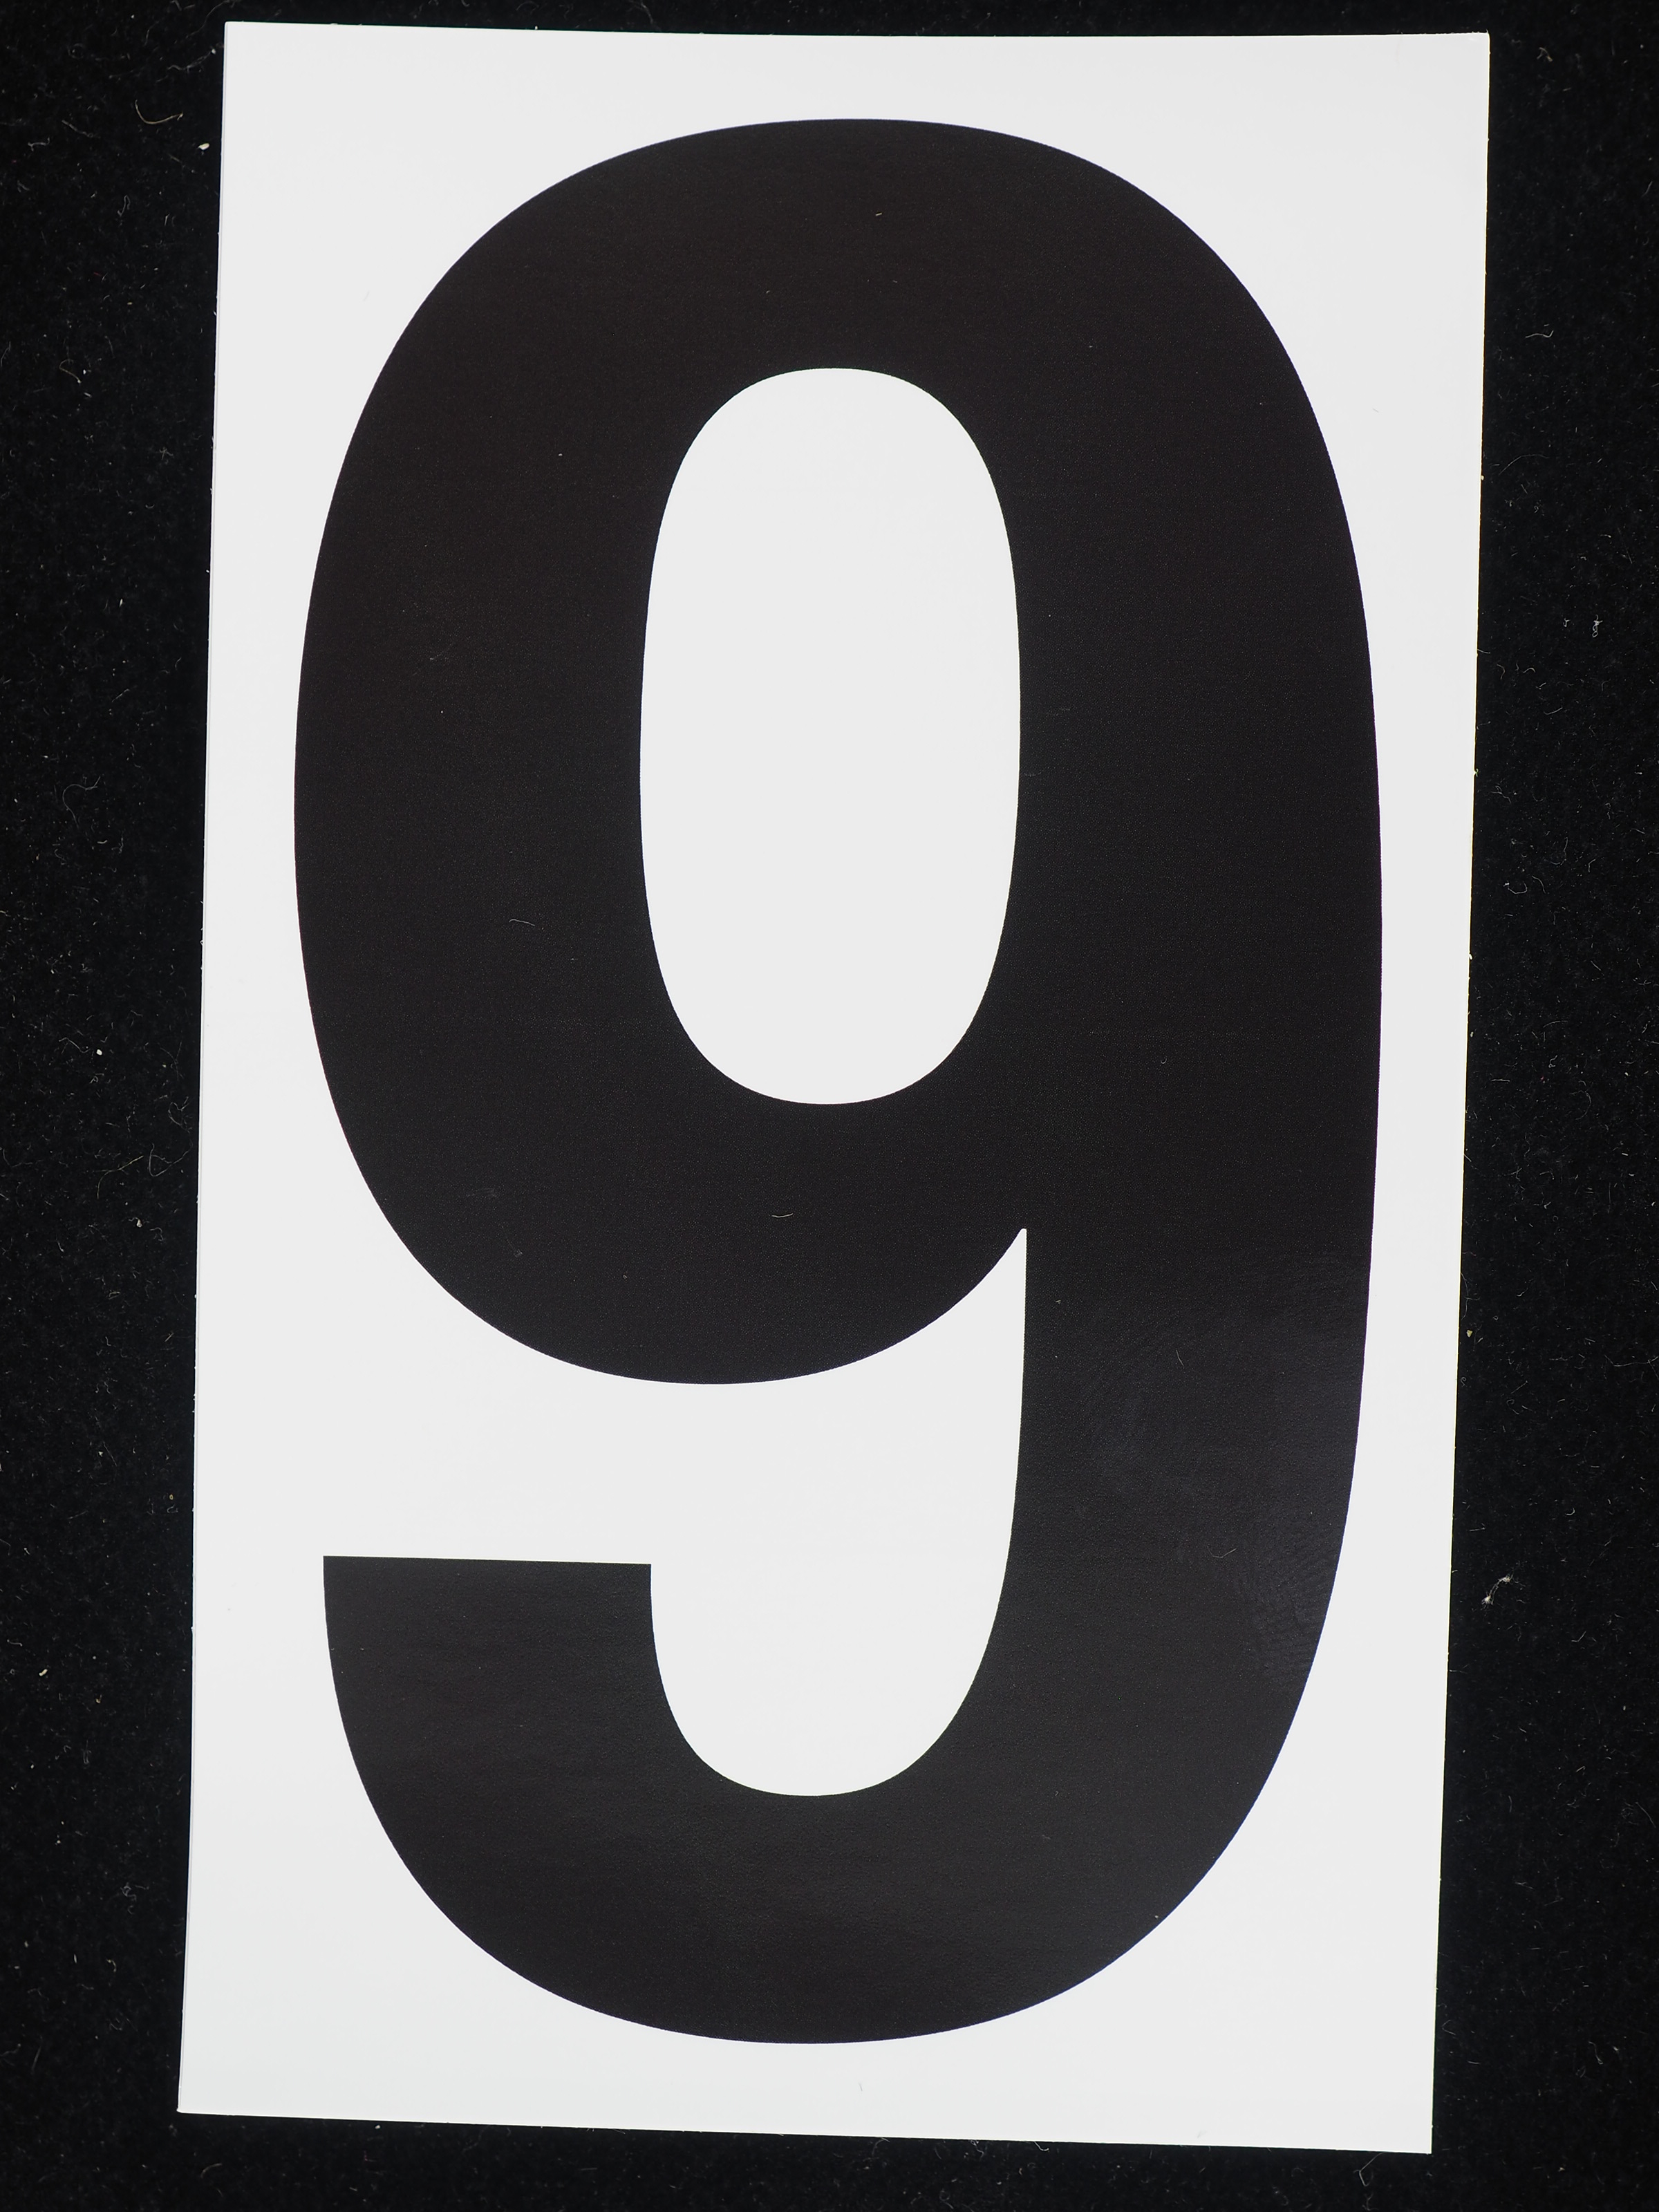 25-5" Sticker Decal Vinyl Adhesive Address Numbers Black & White No.3 USA MADE 